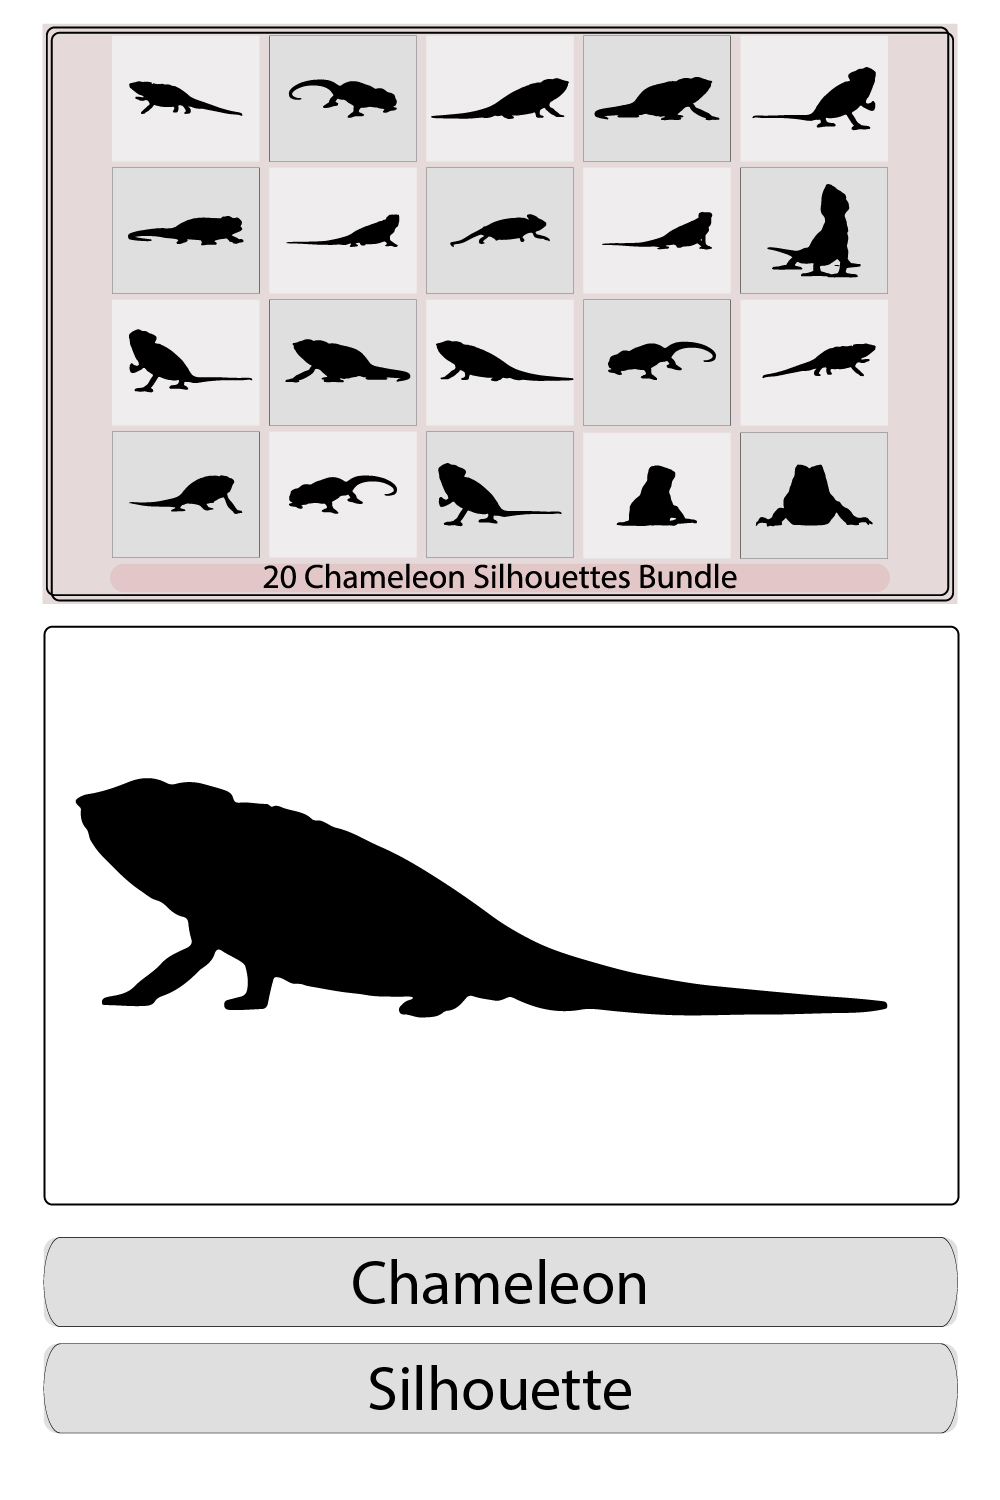 silhouette of a chameleon,Chameleon graphic icon,Chameleon lizard reptile black silhouette,Vector illustration of a chameleon silhouette, pinterest preview image.